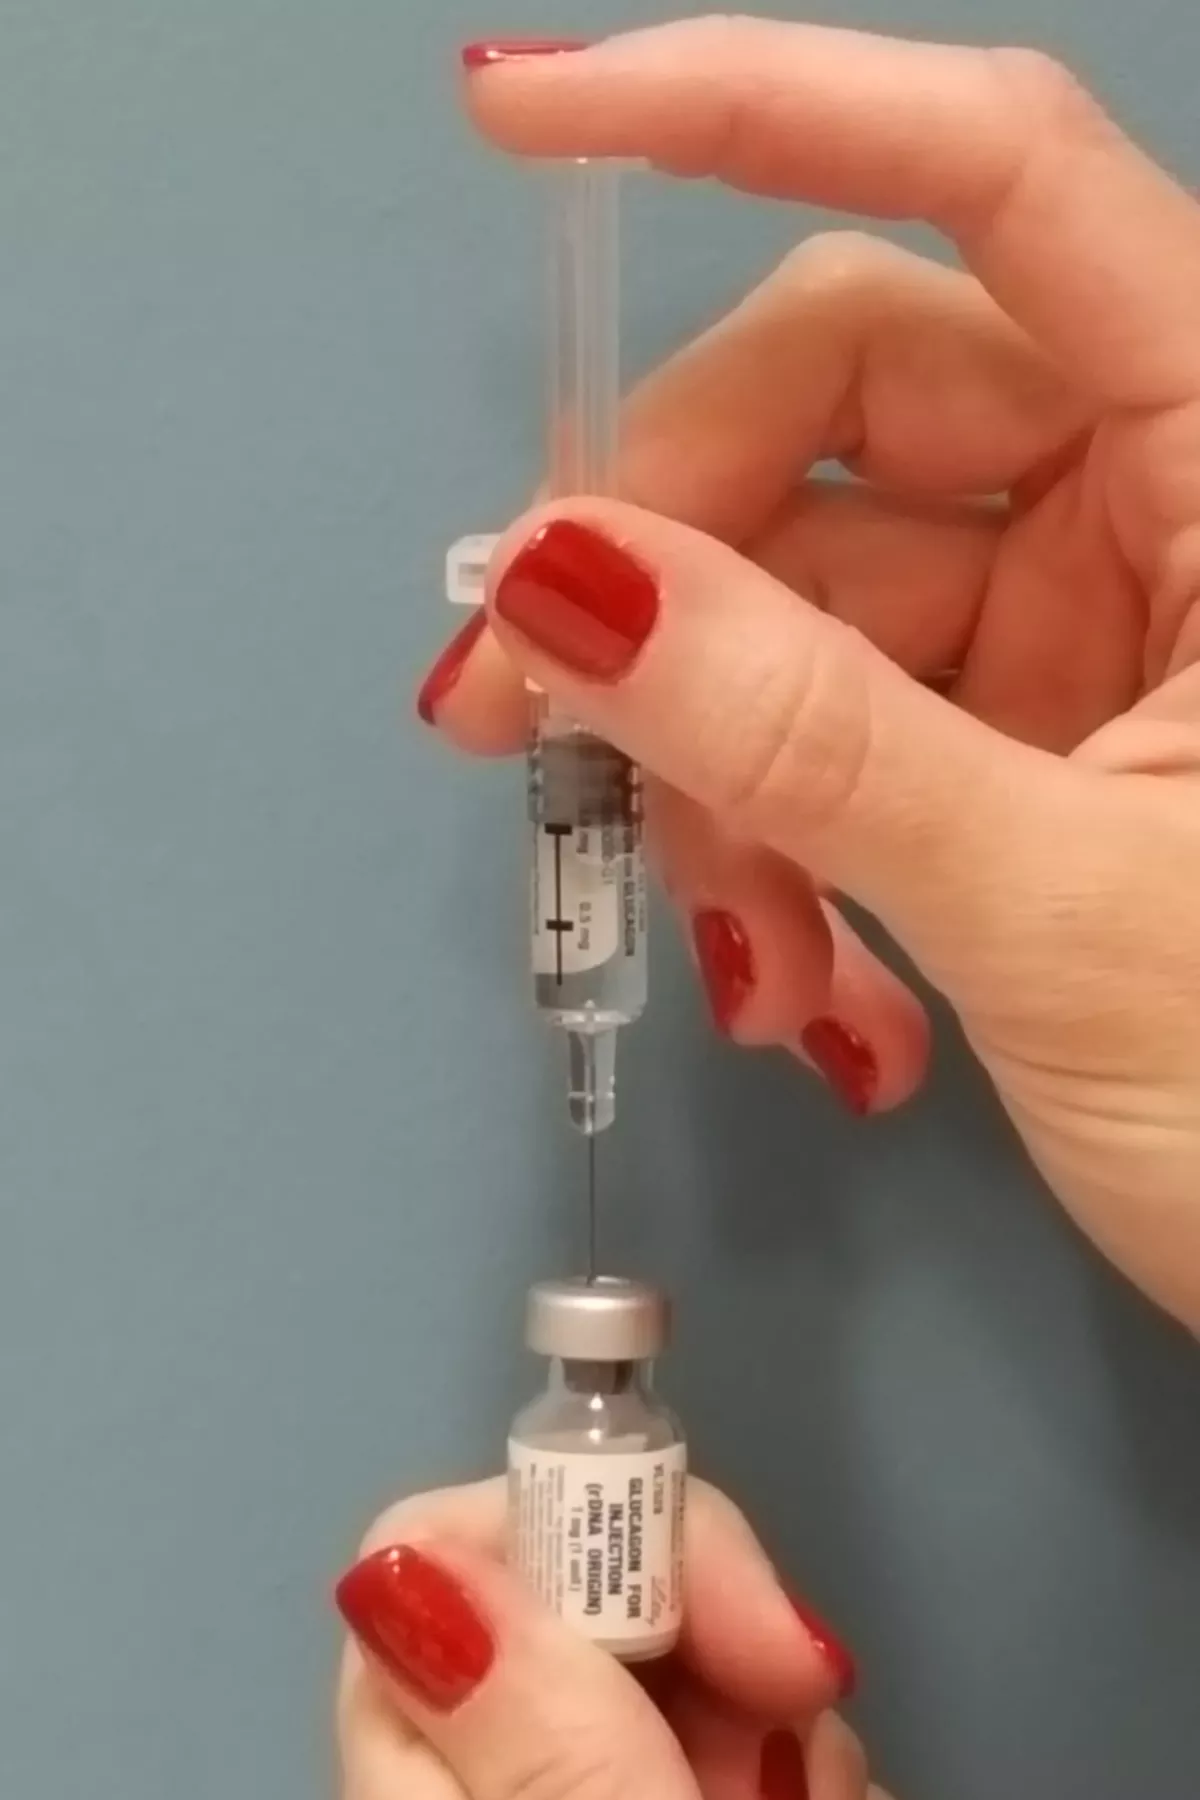 inserting needle into glucagon, photo